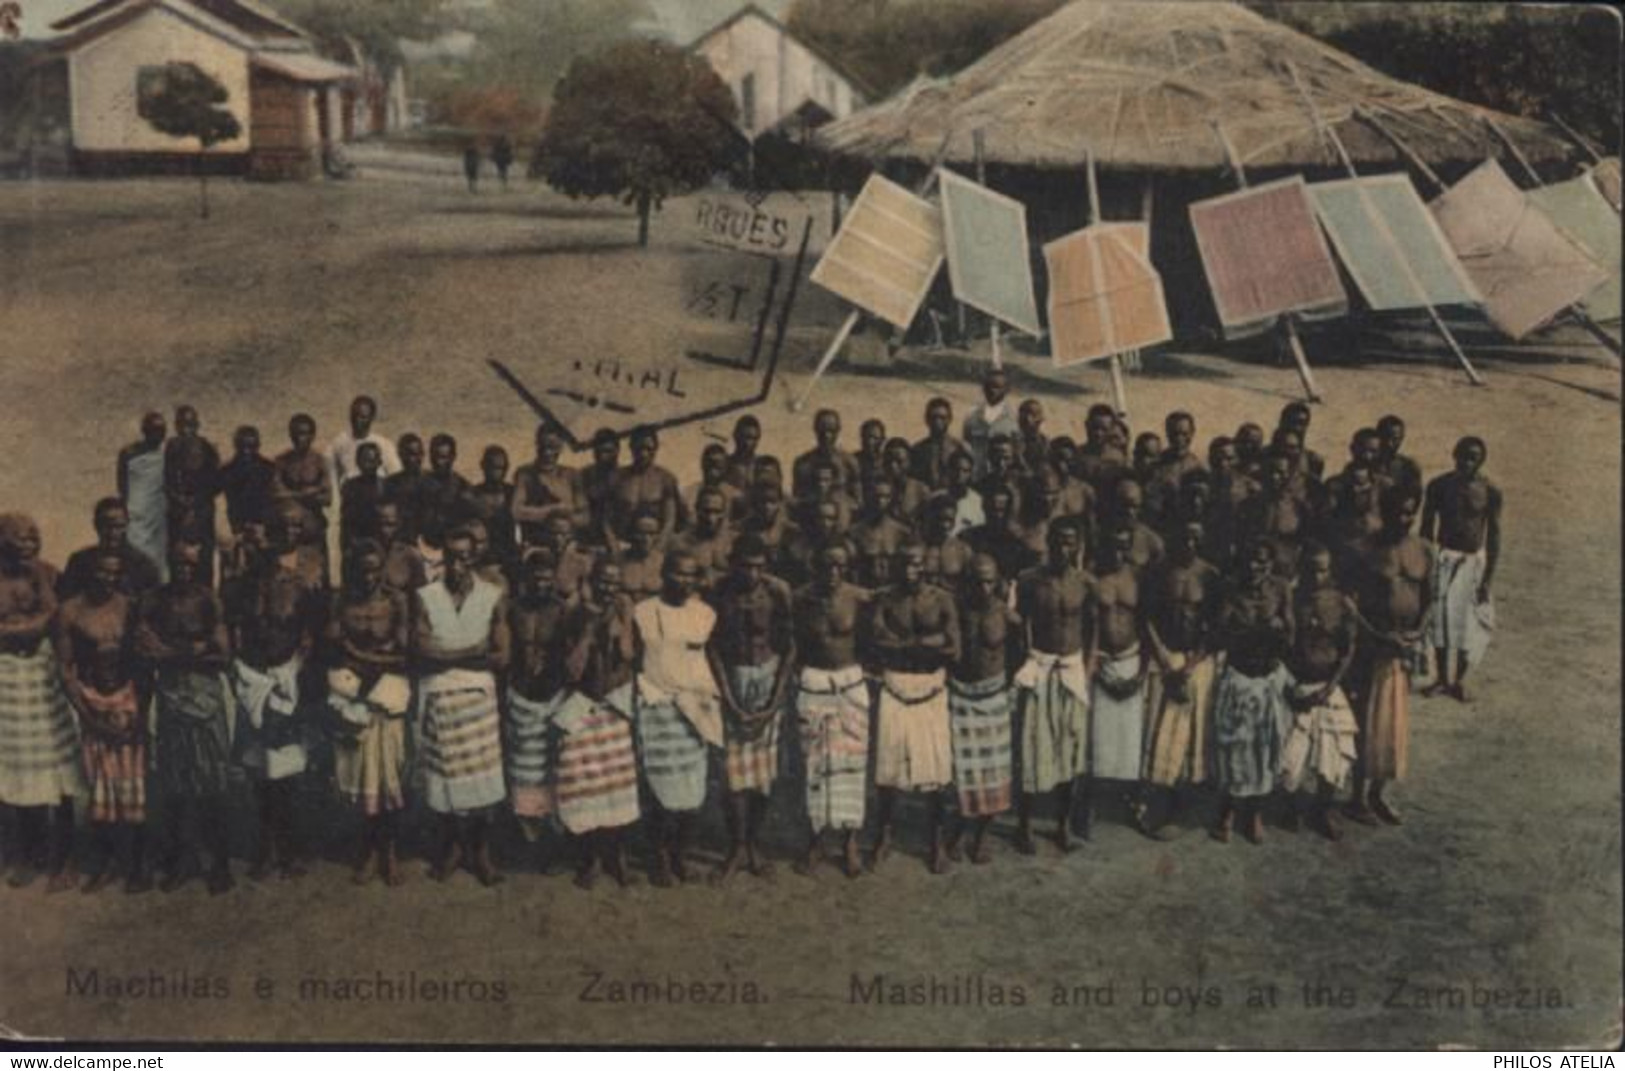 Afrique CPA CP Mozambique Machilas E Machileiros Zambezia Mashillas And Boys At The Zambezia CAD 19 8 1910 - Mozambique